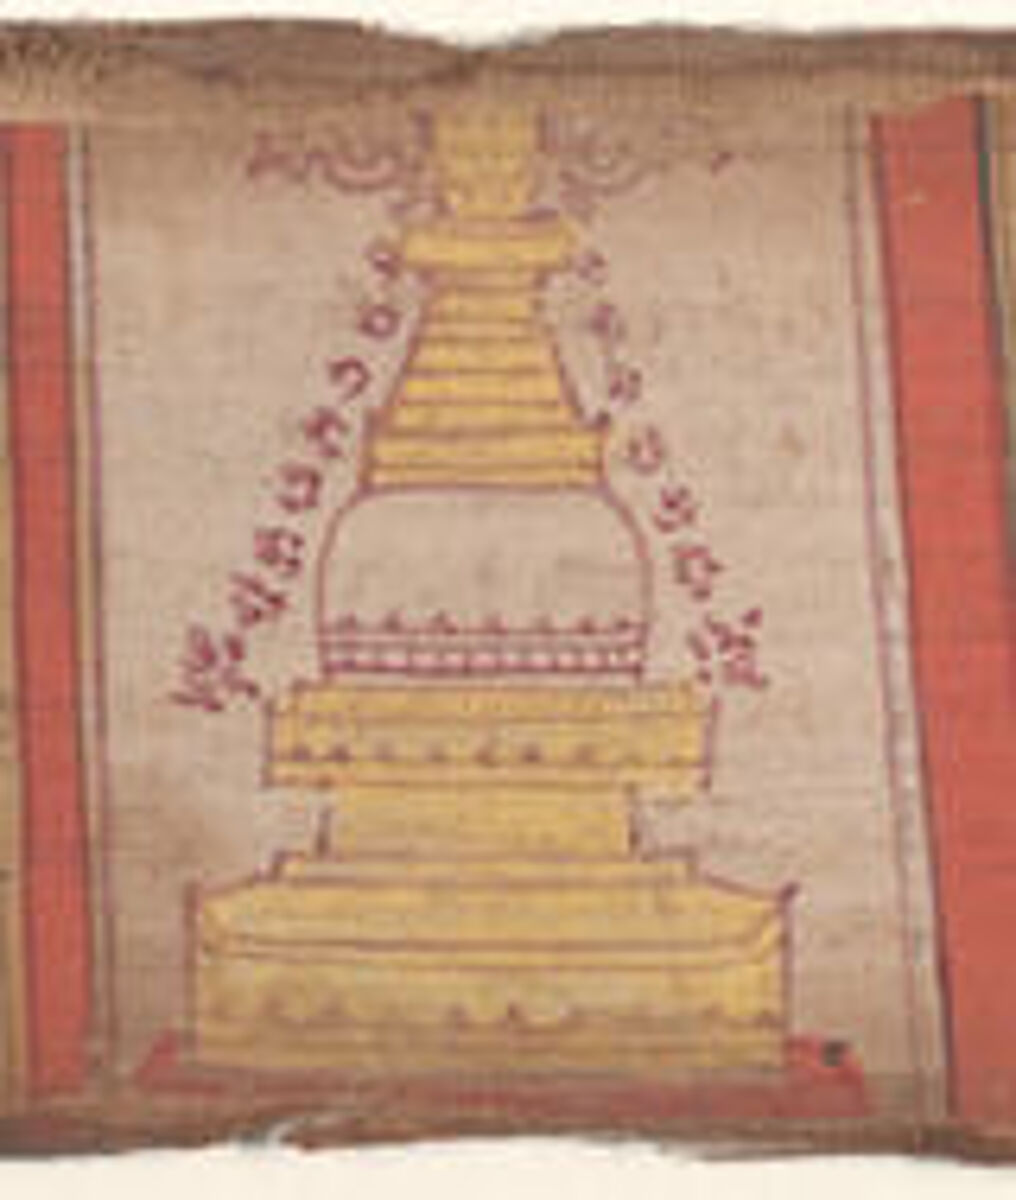 Folio from a Manuscript of the Ashtasahasrika Prajnaparamita (Perfection of Wisdom), Ink and color on palm leaf, India (Bihar or West Bengal) 